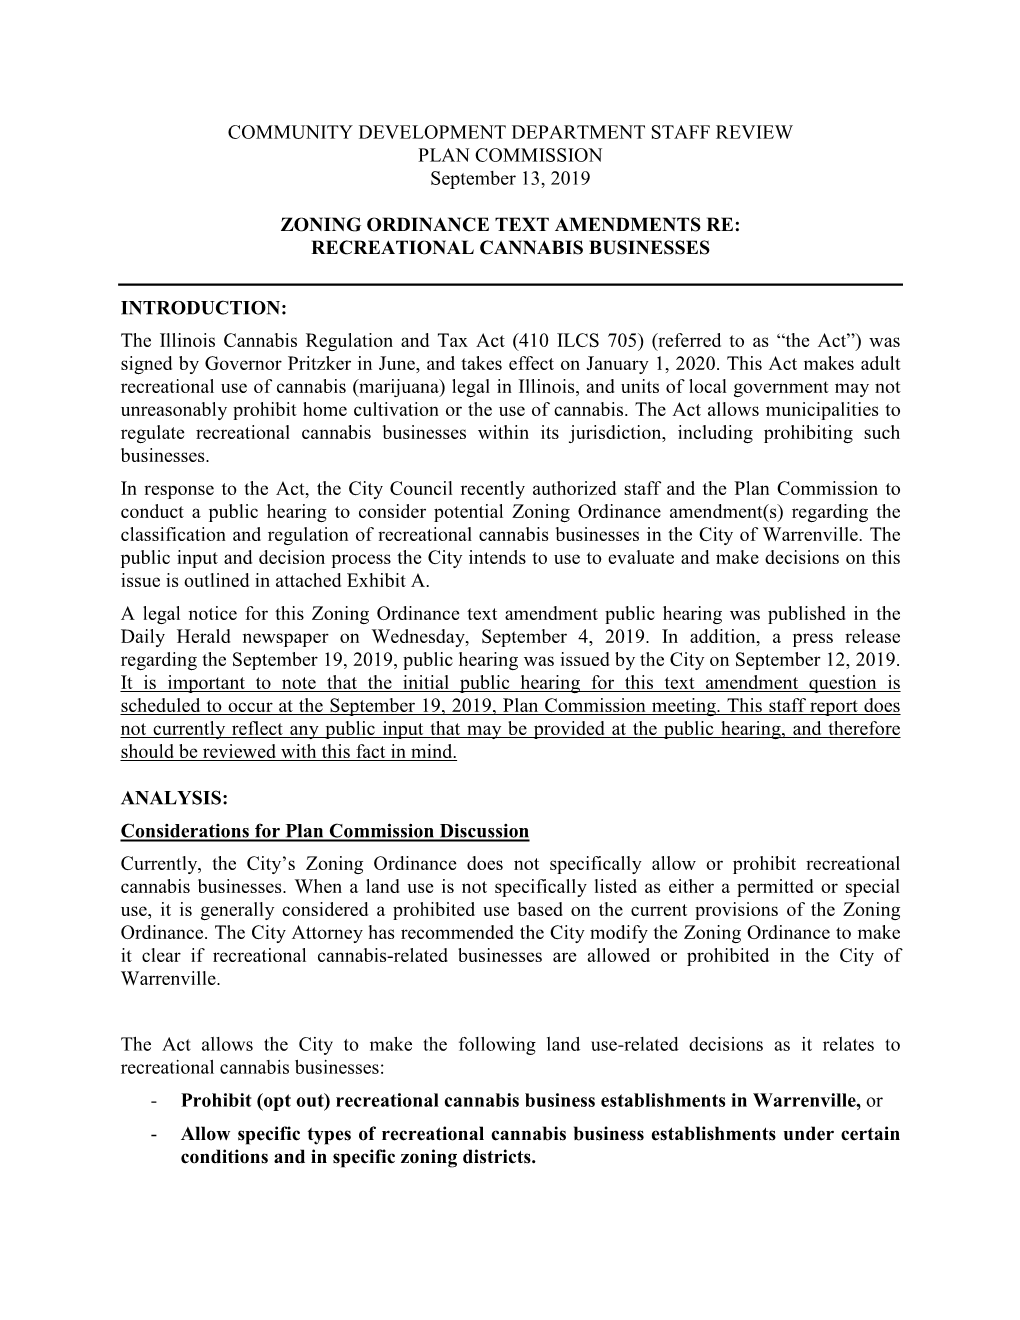 COMMUNITY DEVELOPMENT DEPARTMENT STAFF REVIEW PLAN COMMISSION September 13, 2019